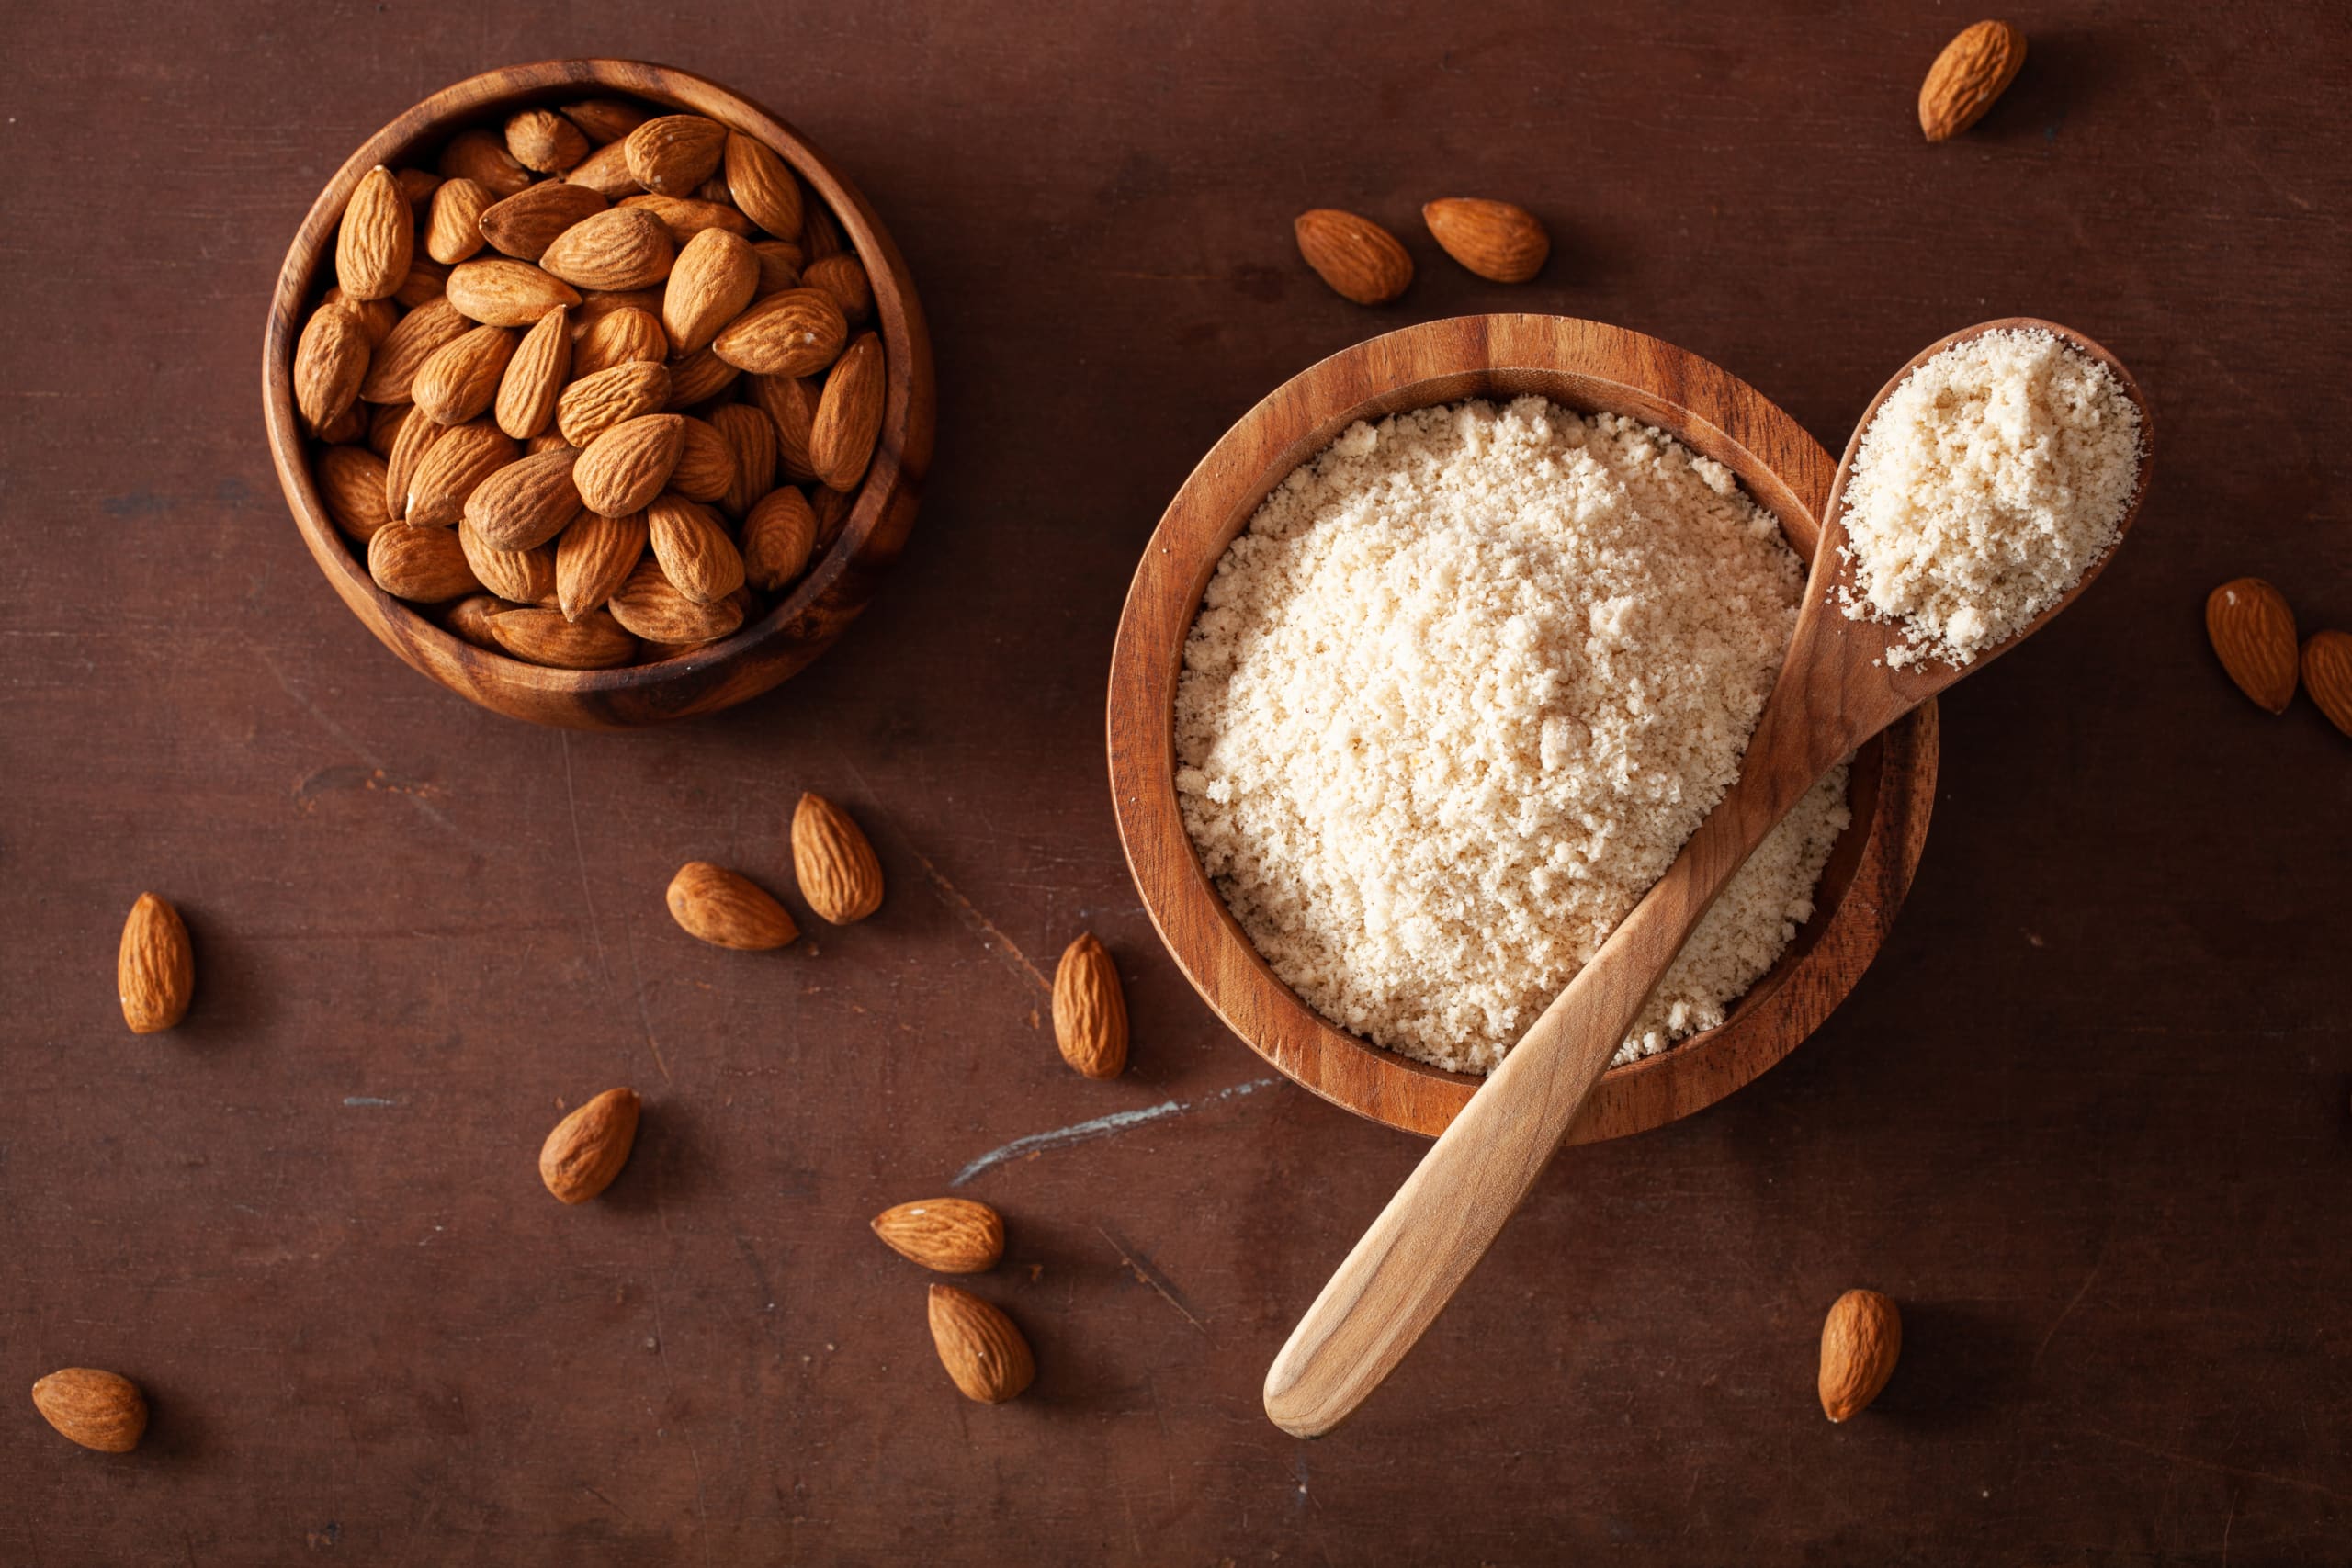 Can You Substitute Almond Flour For Regular Flour?